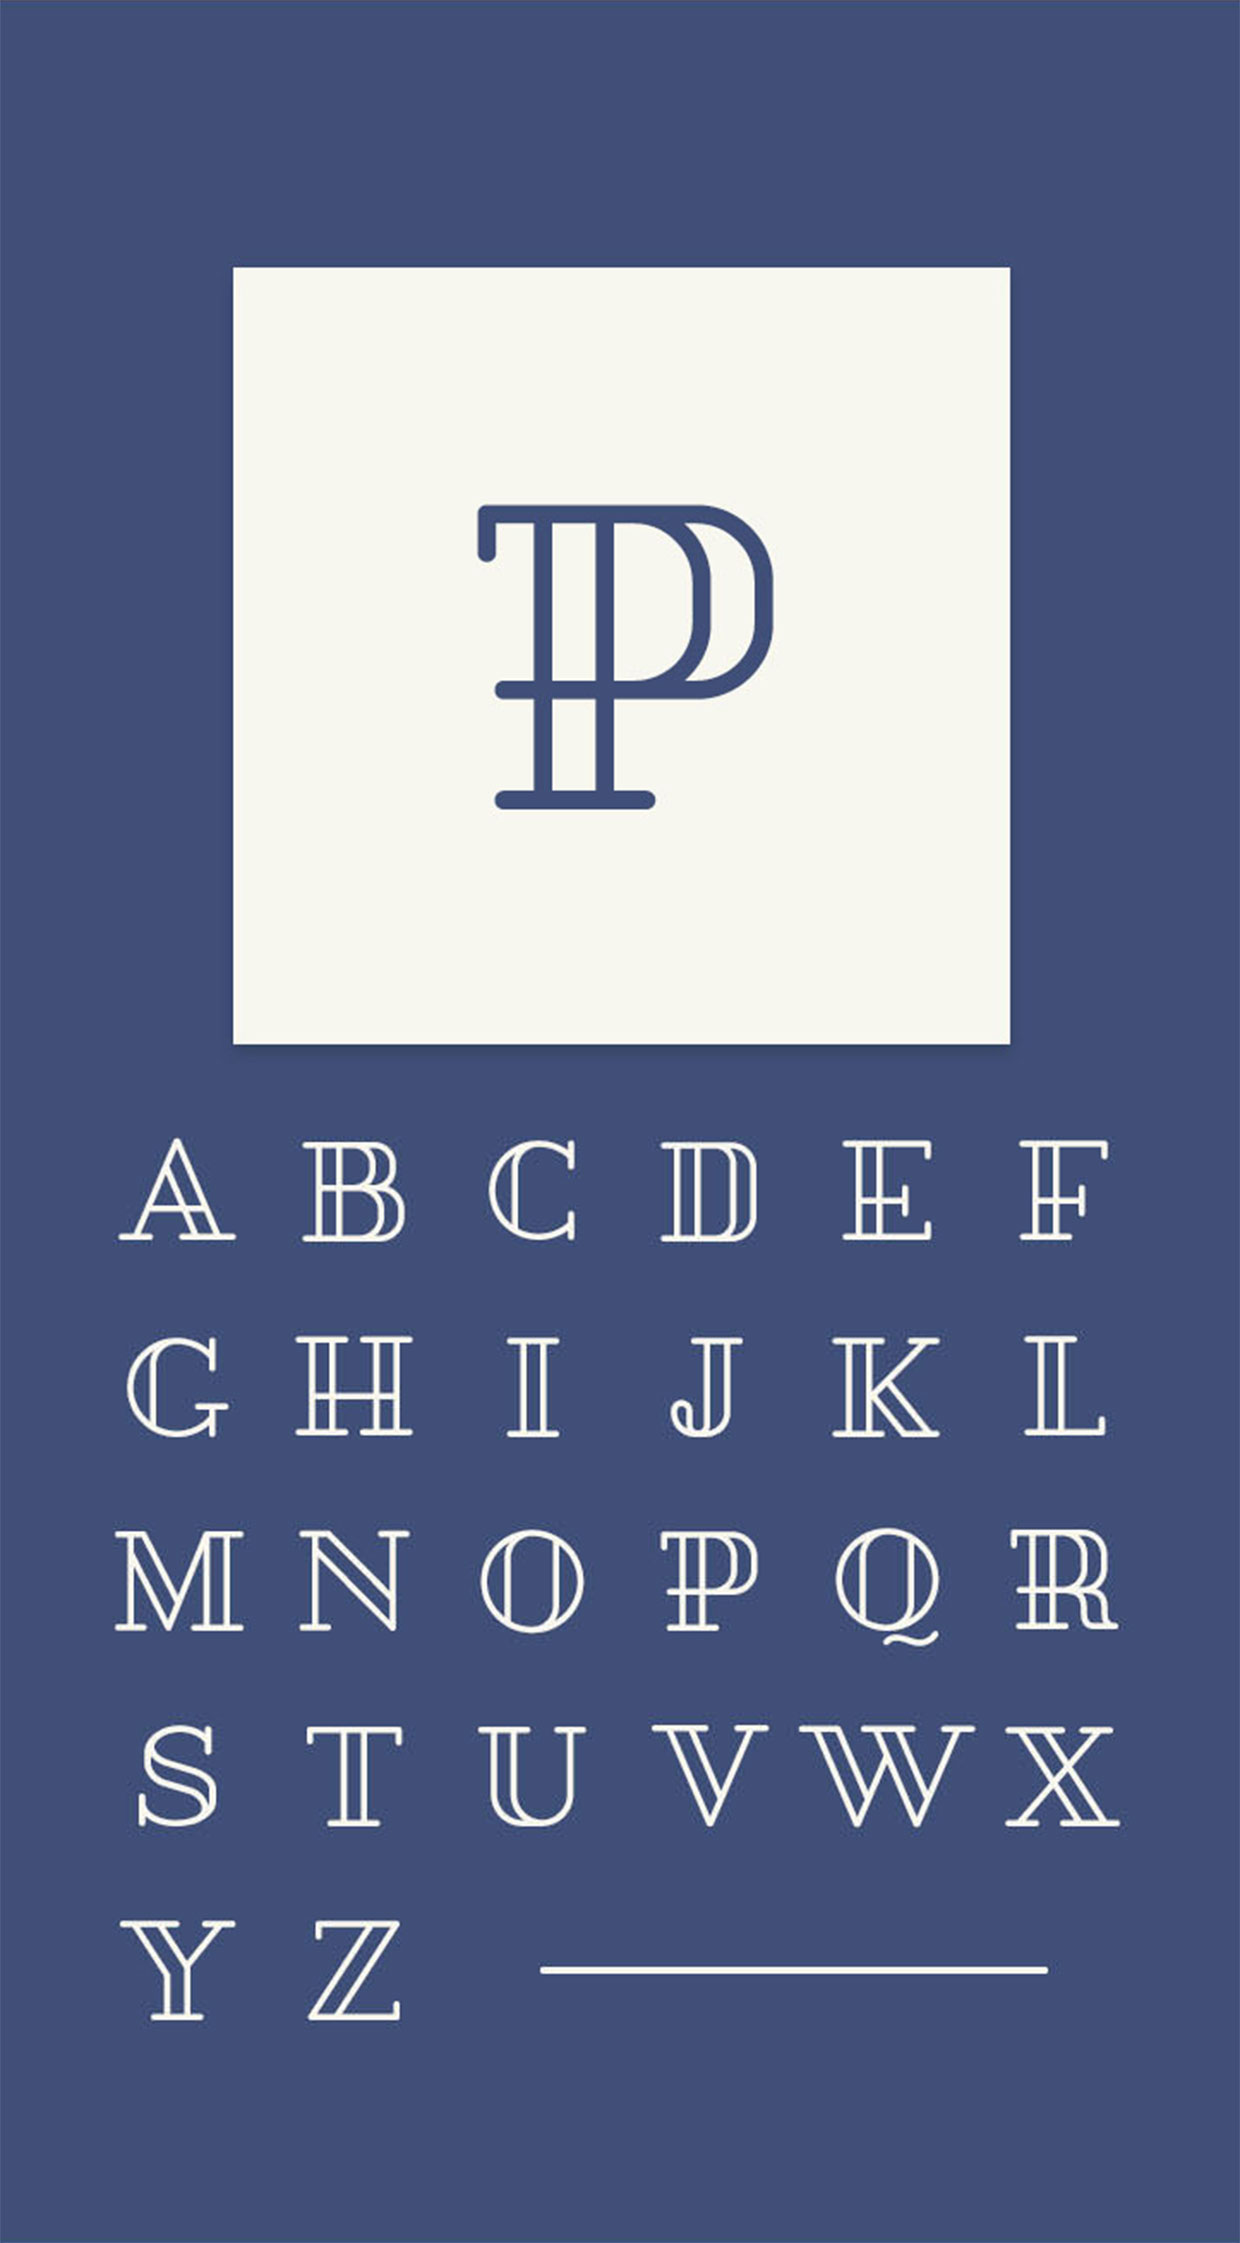 pirou-best-free-logo-fonts-068